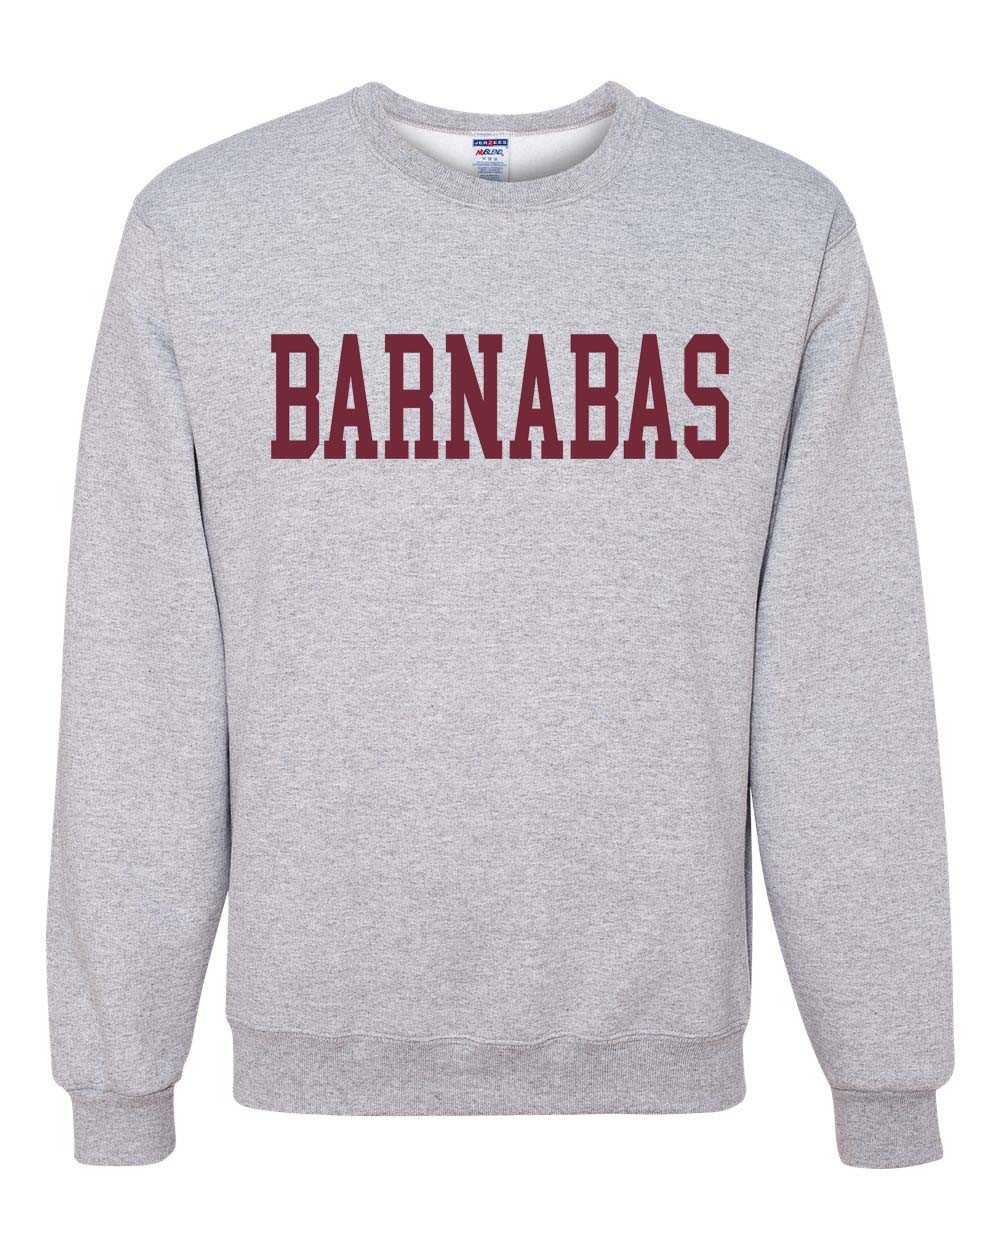 SBS Staff Sweatshirt w/ Barnabas Logo - Please allow 2-3 Weeks for Delivery